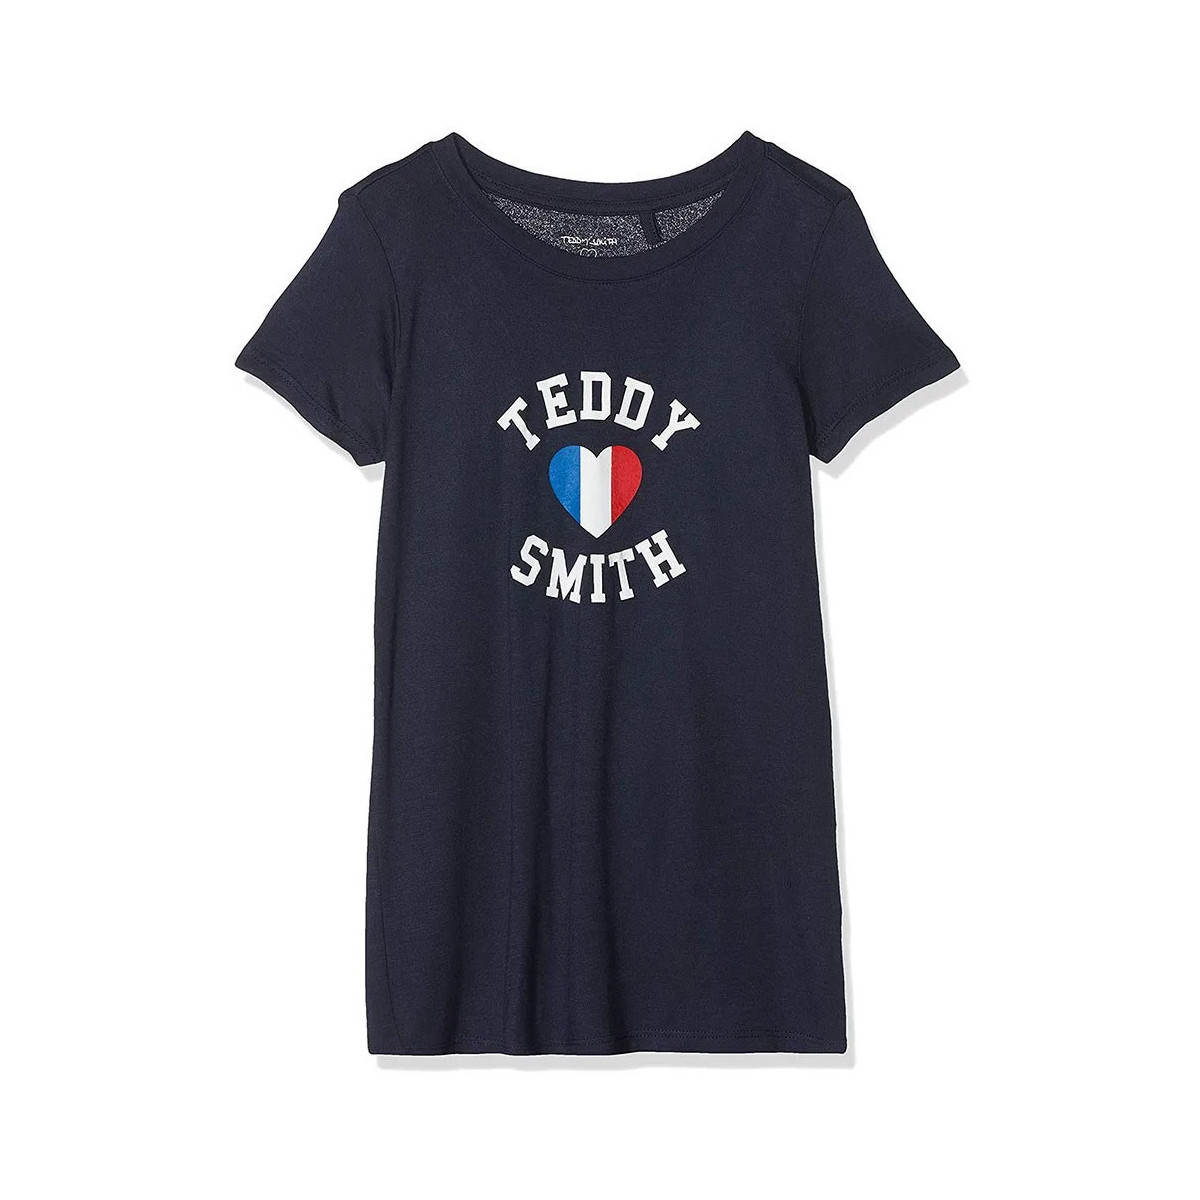 Textil Rapariga T-Shirt mangas curtas Teddy Smith  Azul